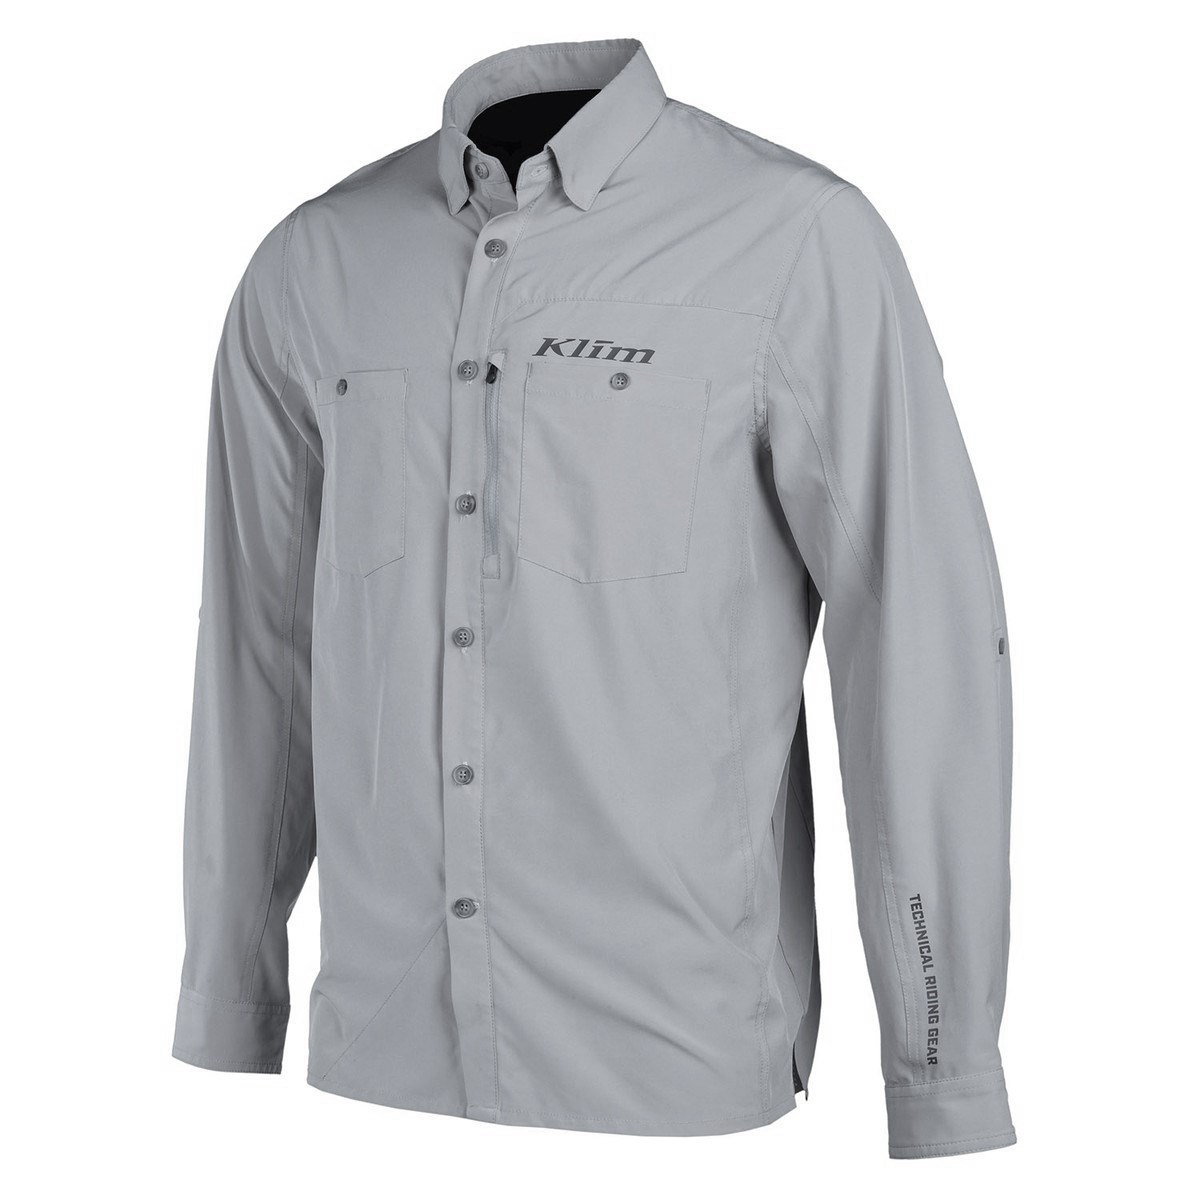 G.Loomis Short Sleeve Tech Tee Shirt sage, T-Shirts, Shirts and Pullovers, Clothing